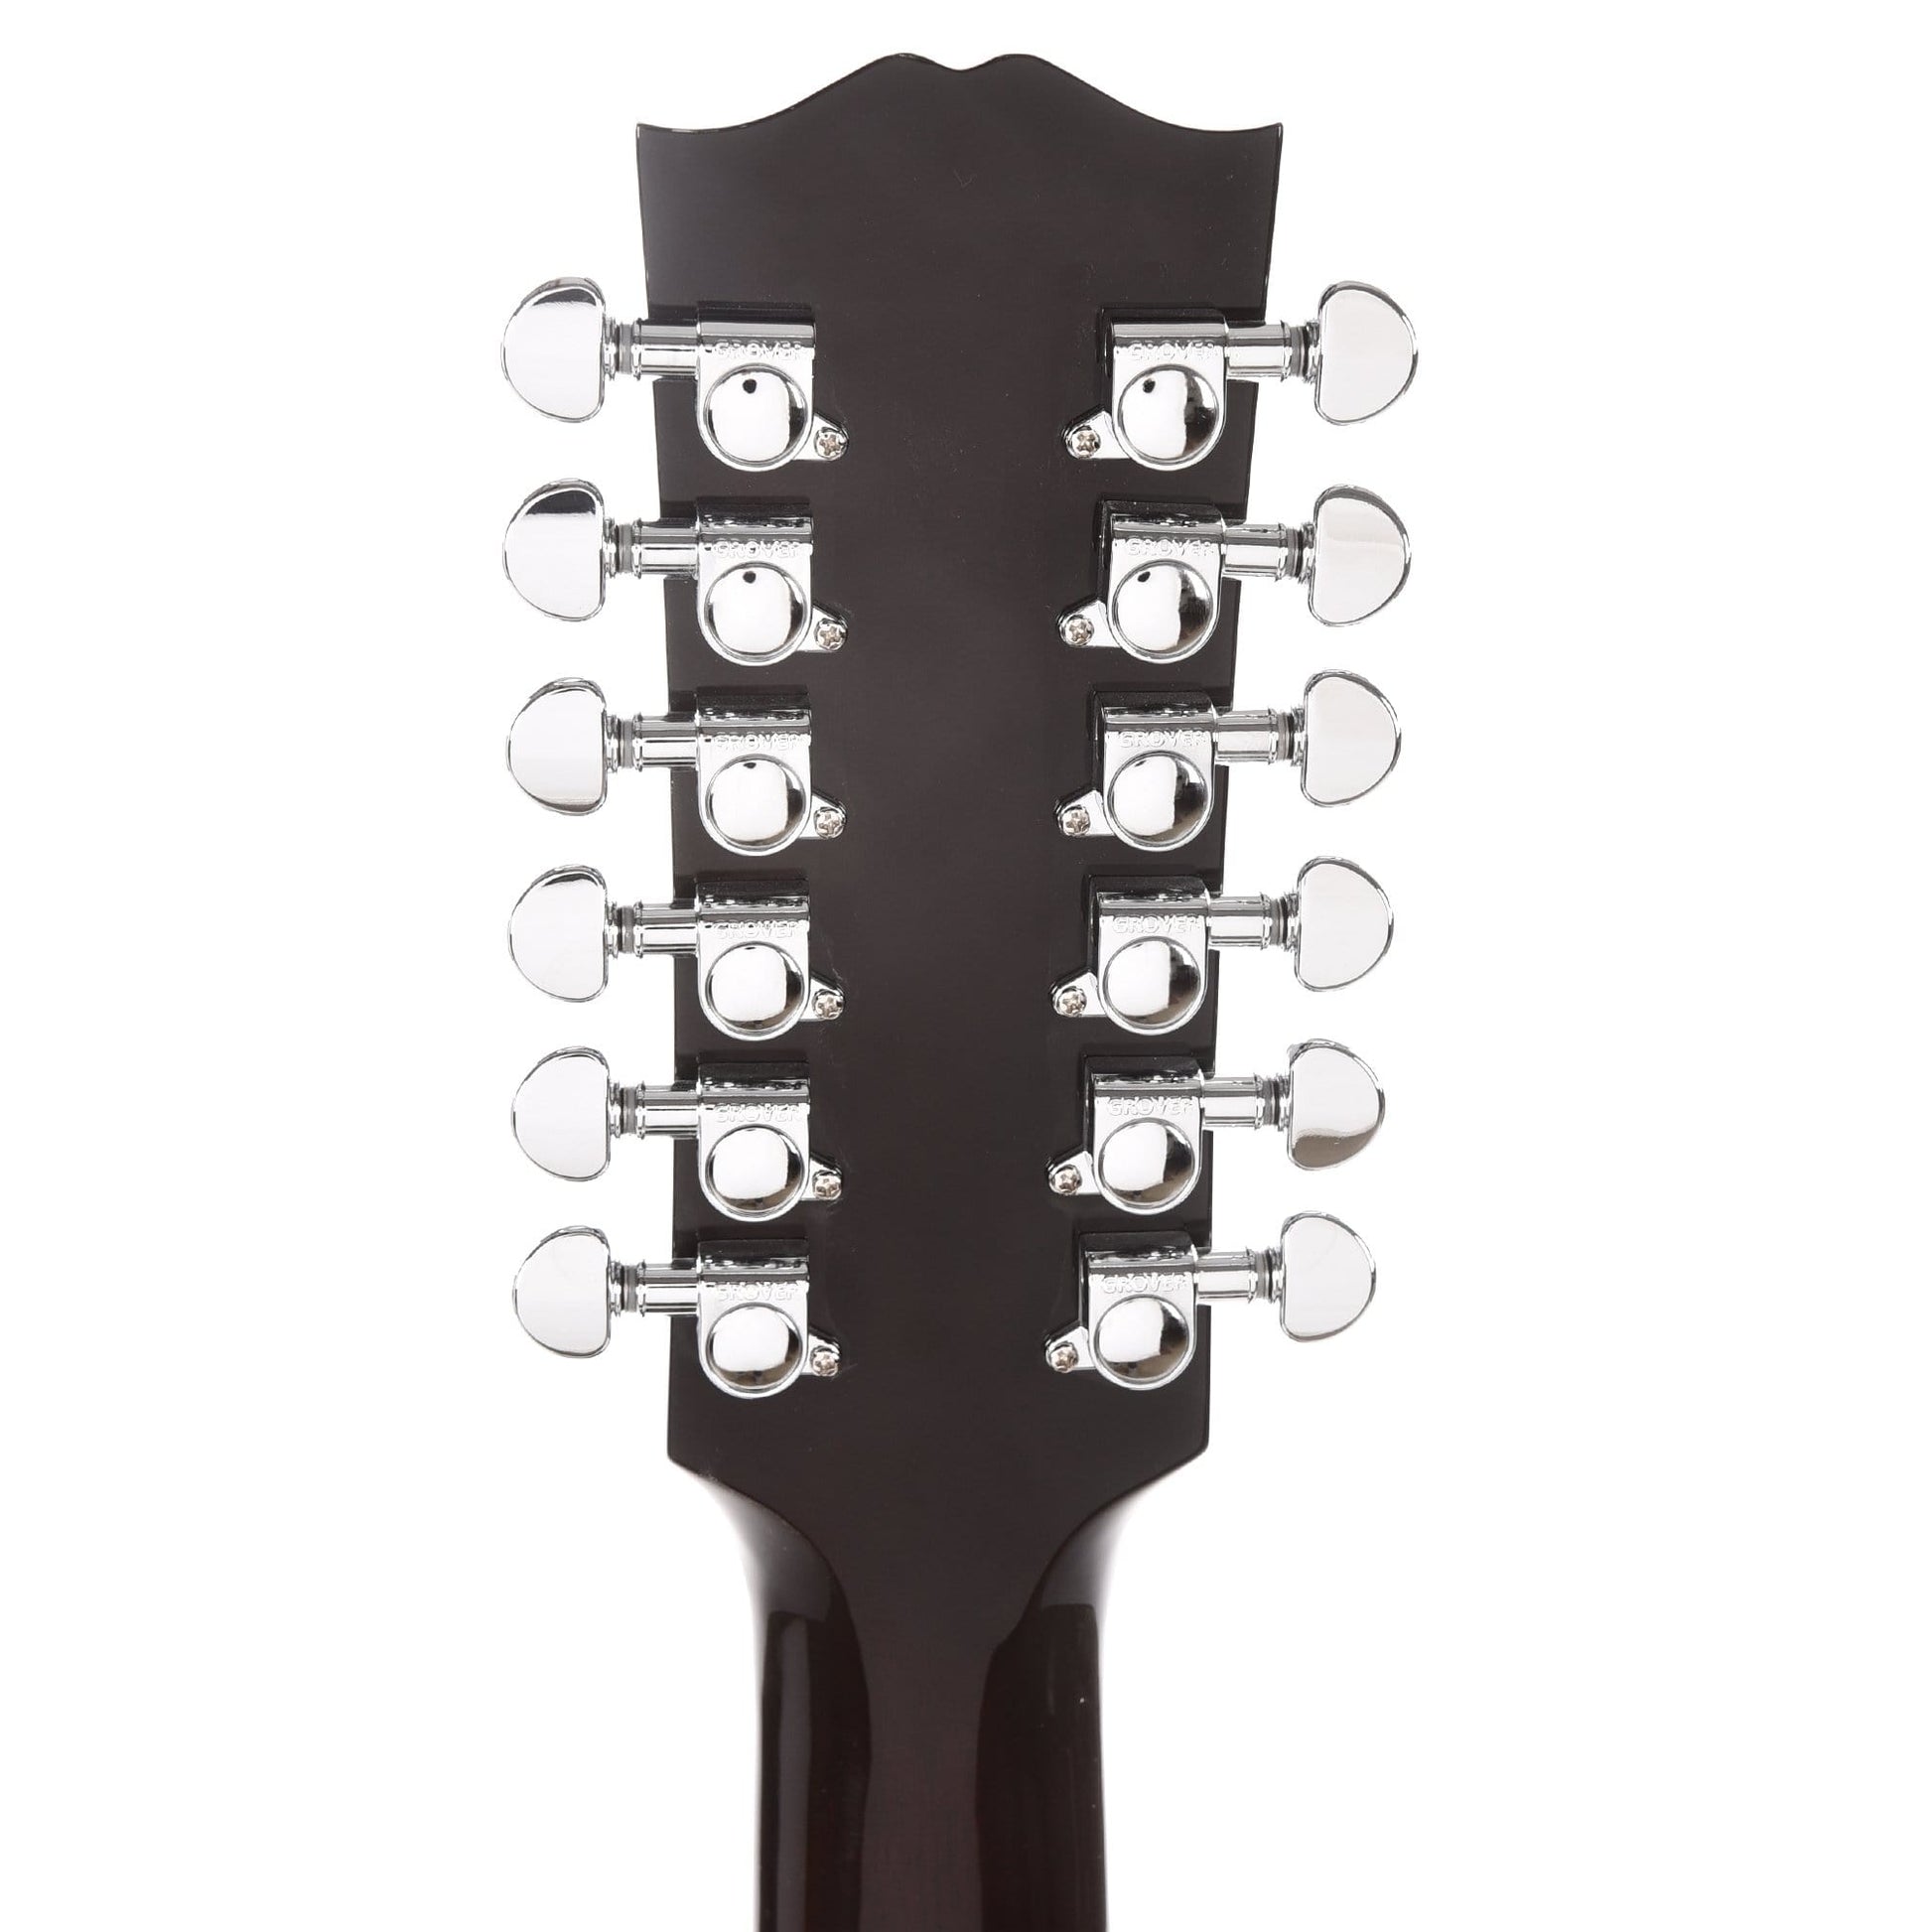 Gibson Montana J-45 Standard 12-String Vintage Sunburst Acoustic Guitars / 12-String